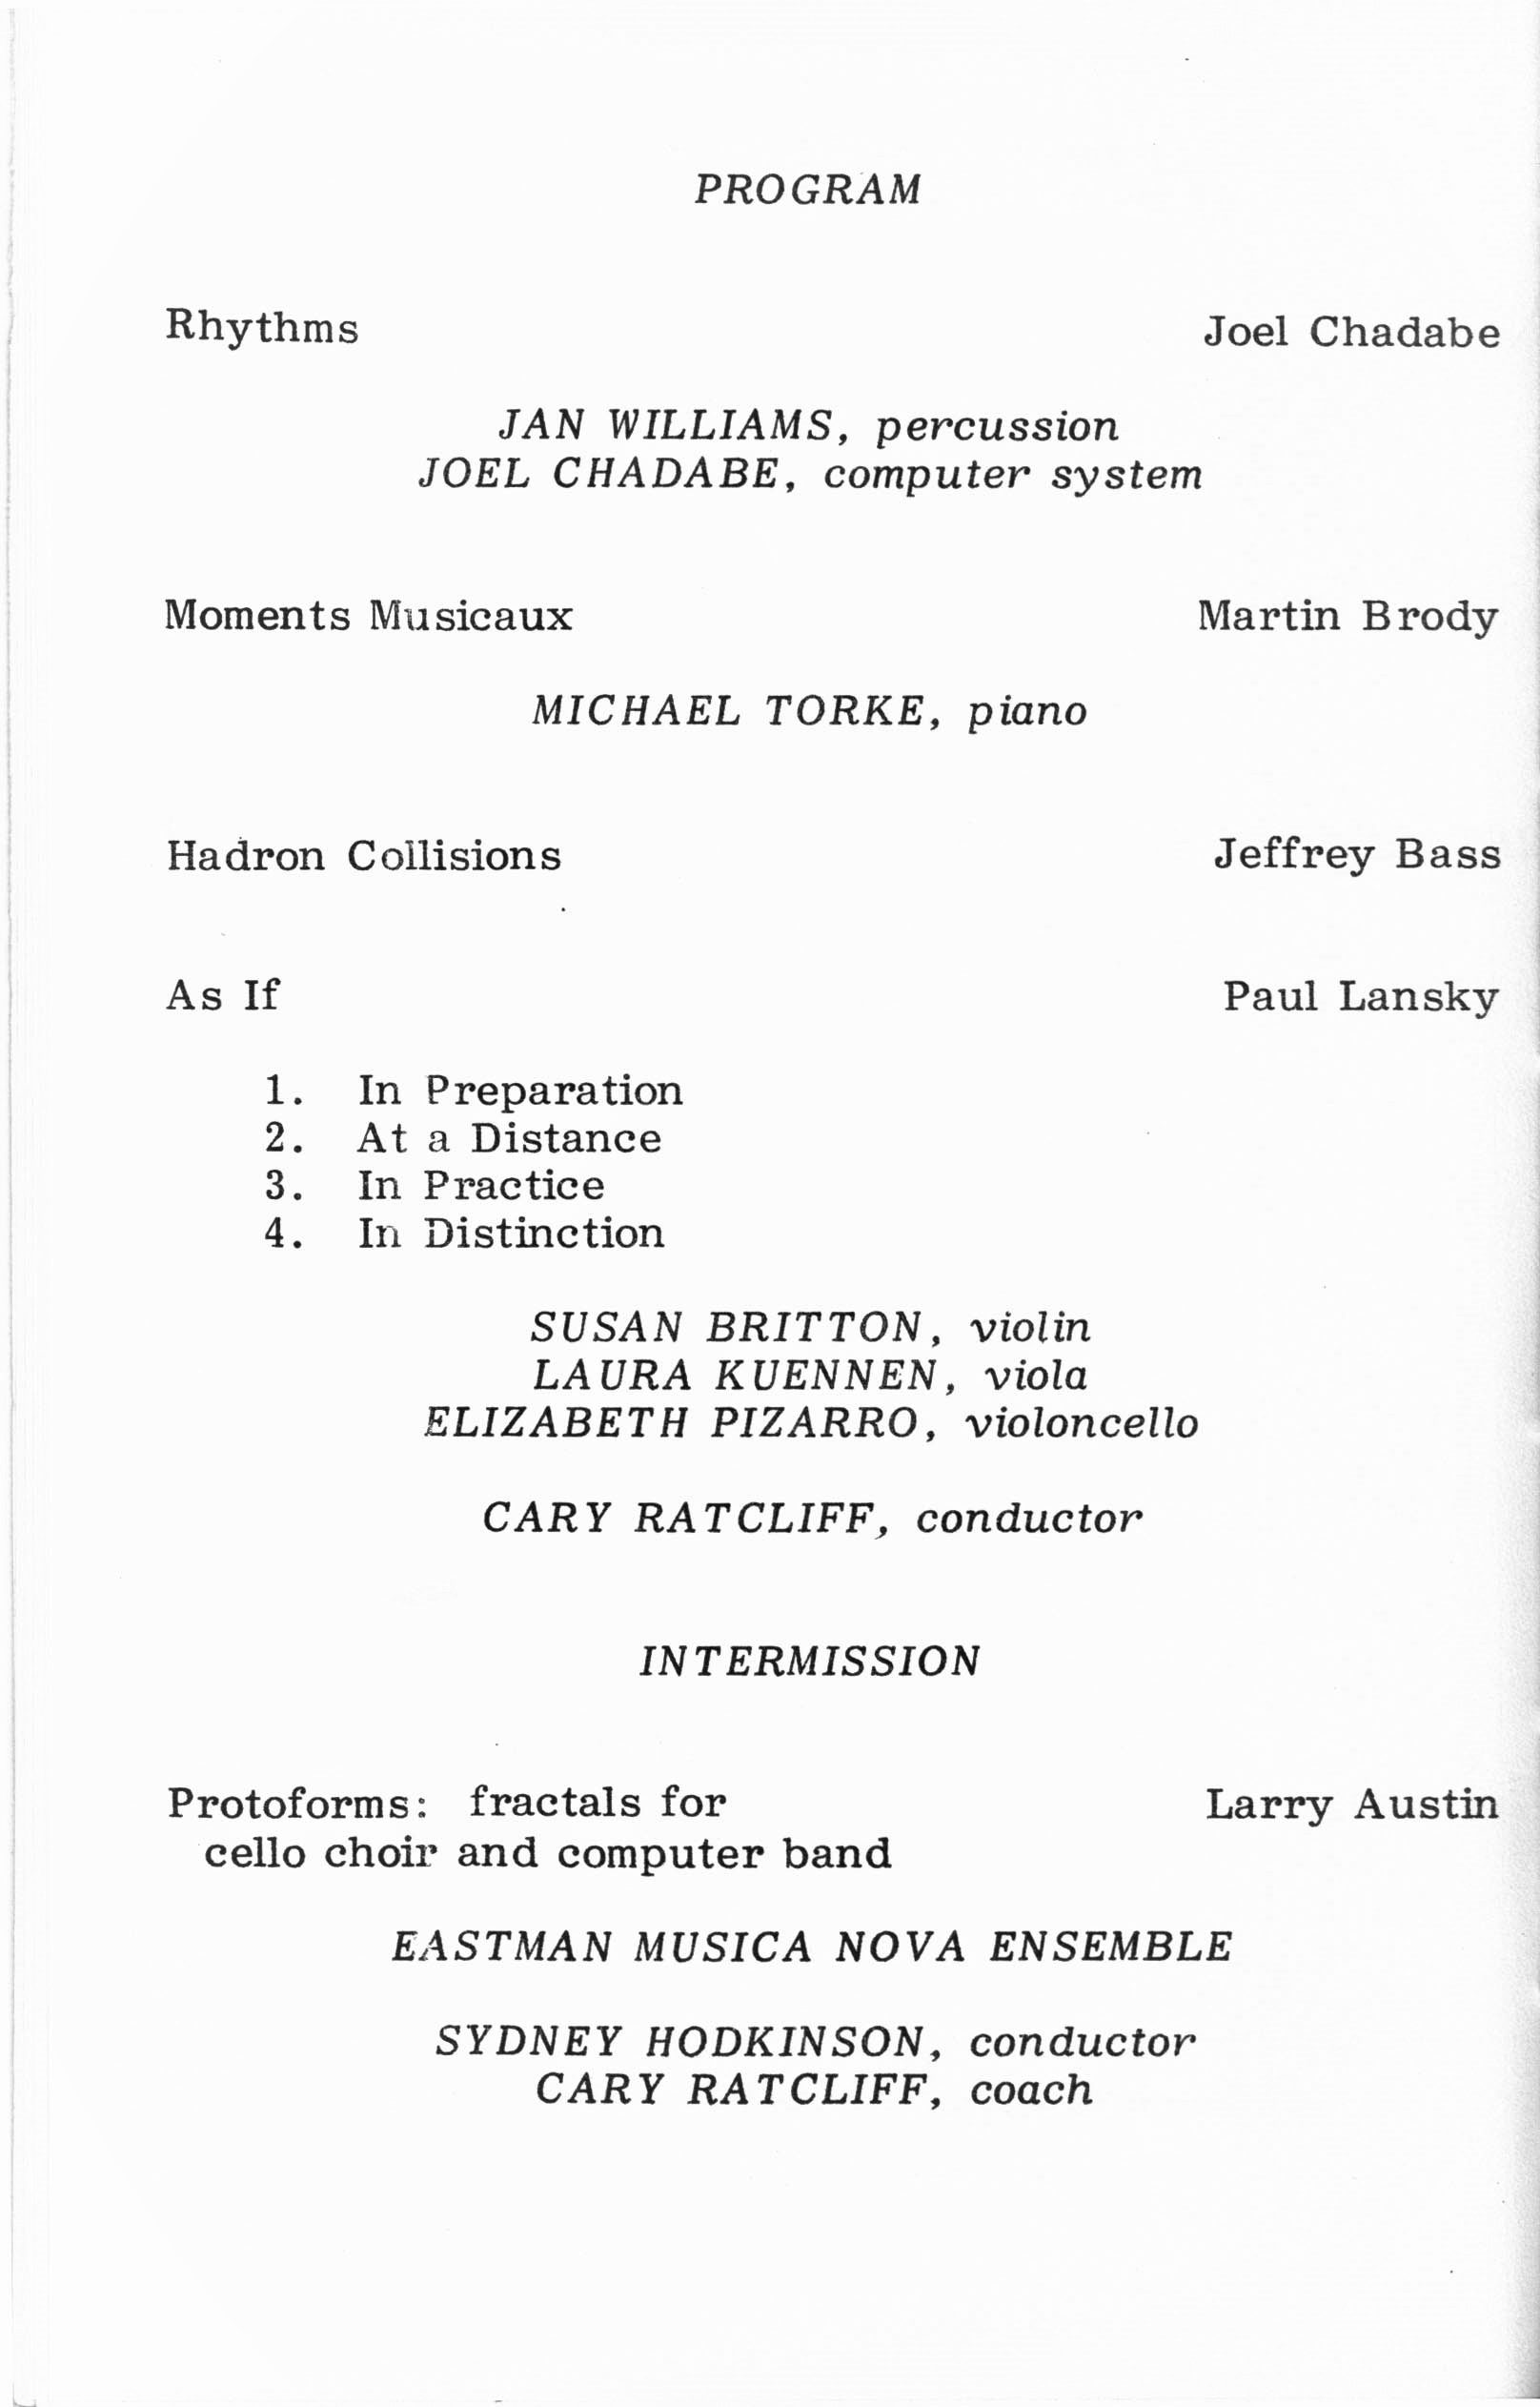 1983 ICMC Concert IV program, page 02